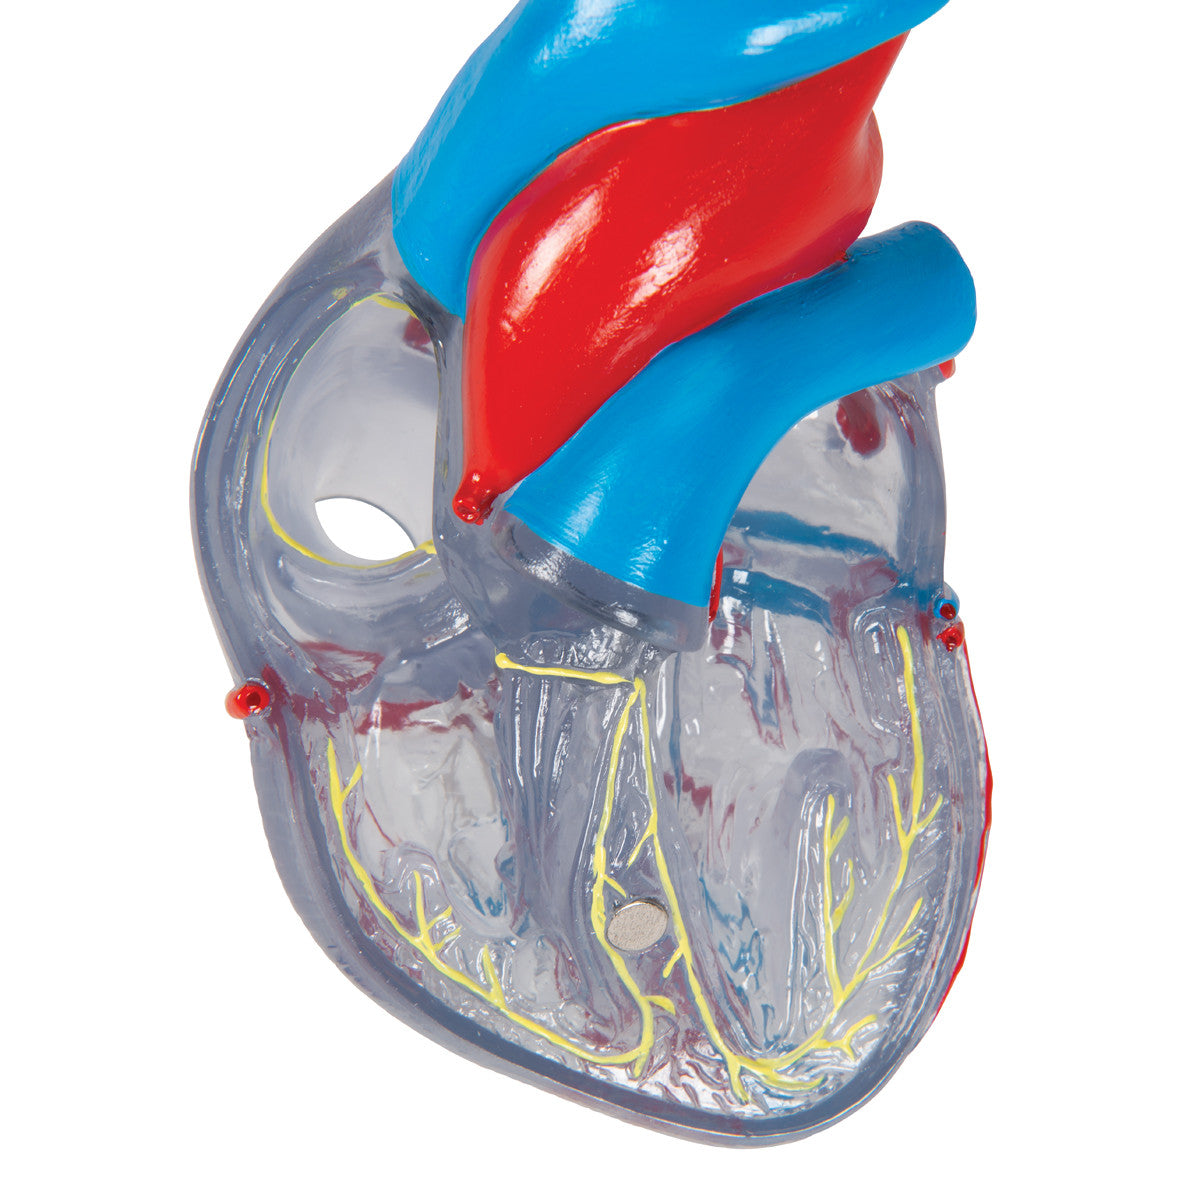 Transparent Heart Model | 3B Scientific G08/3